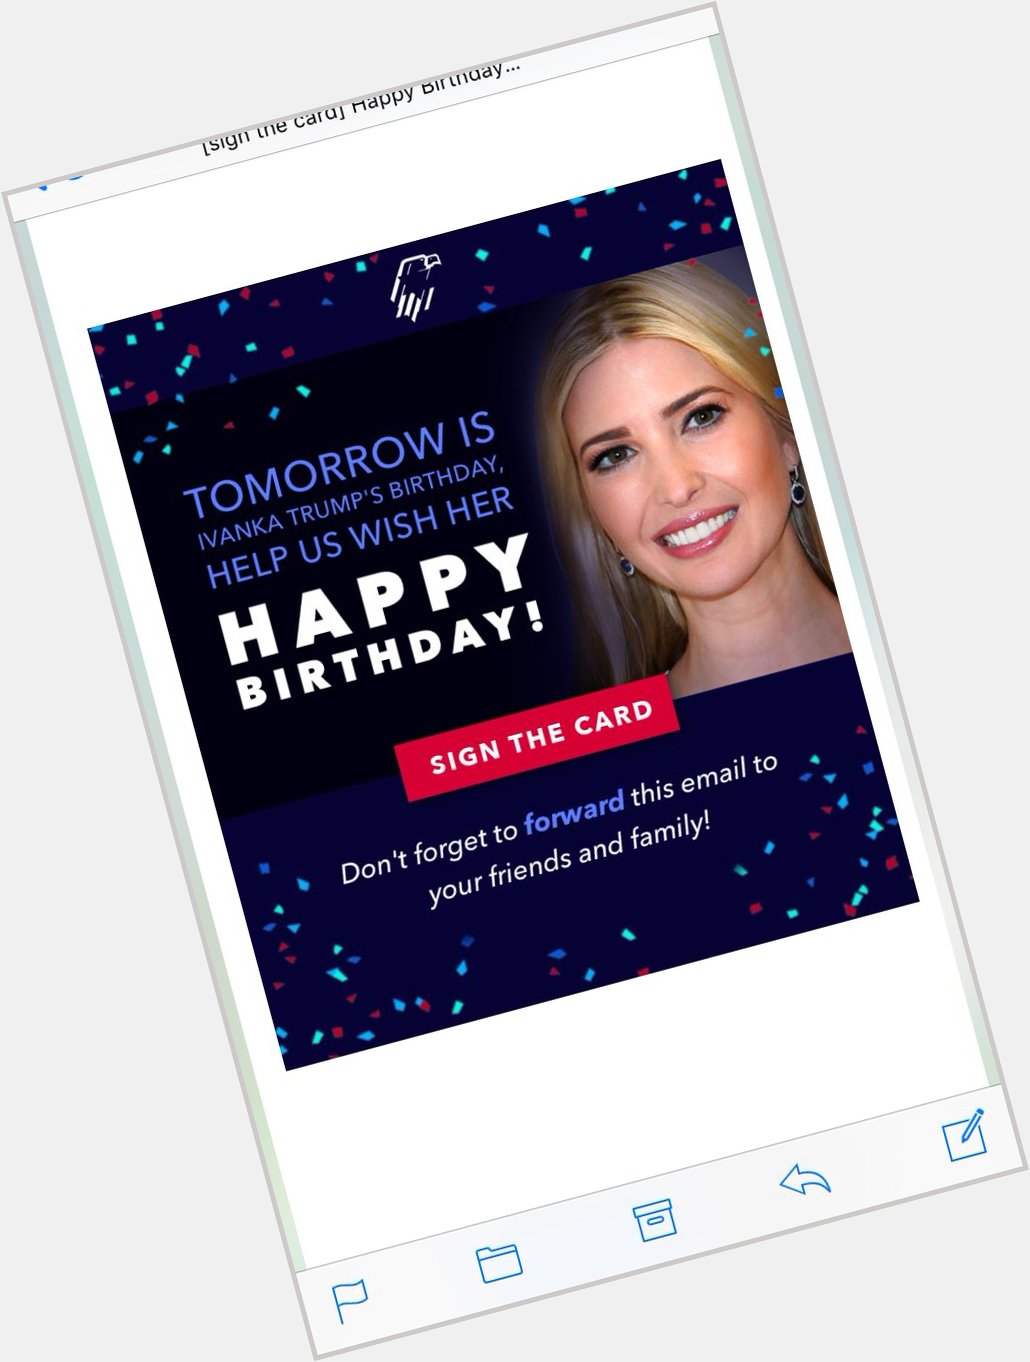 New email: [sign the card] Happy Birthday Ivanka Trump 